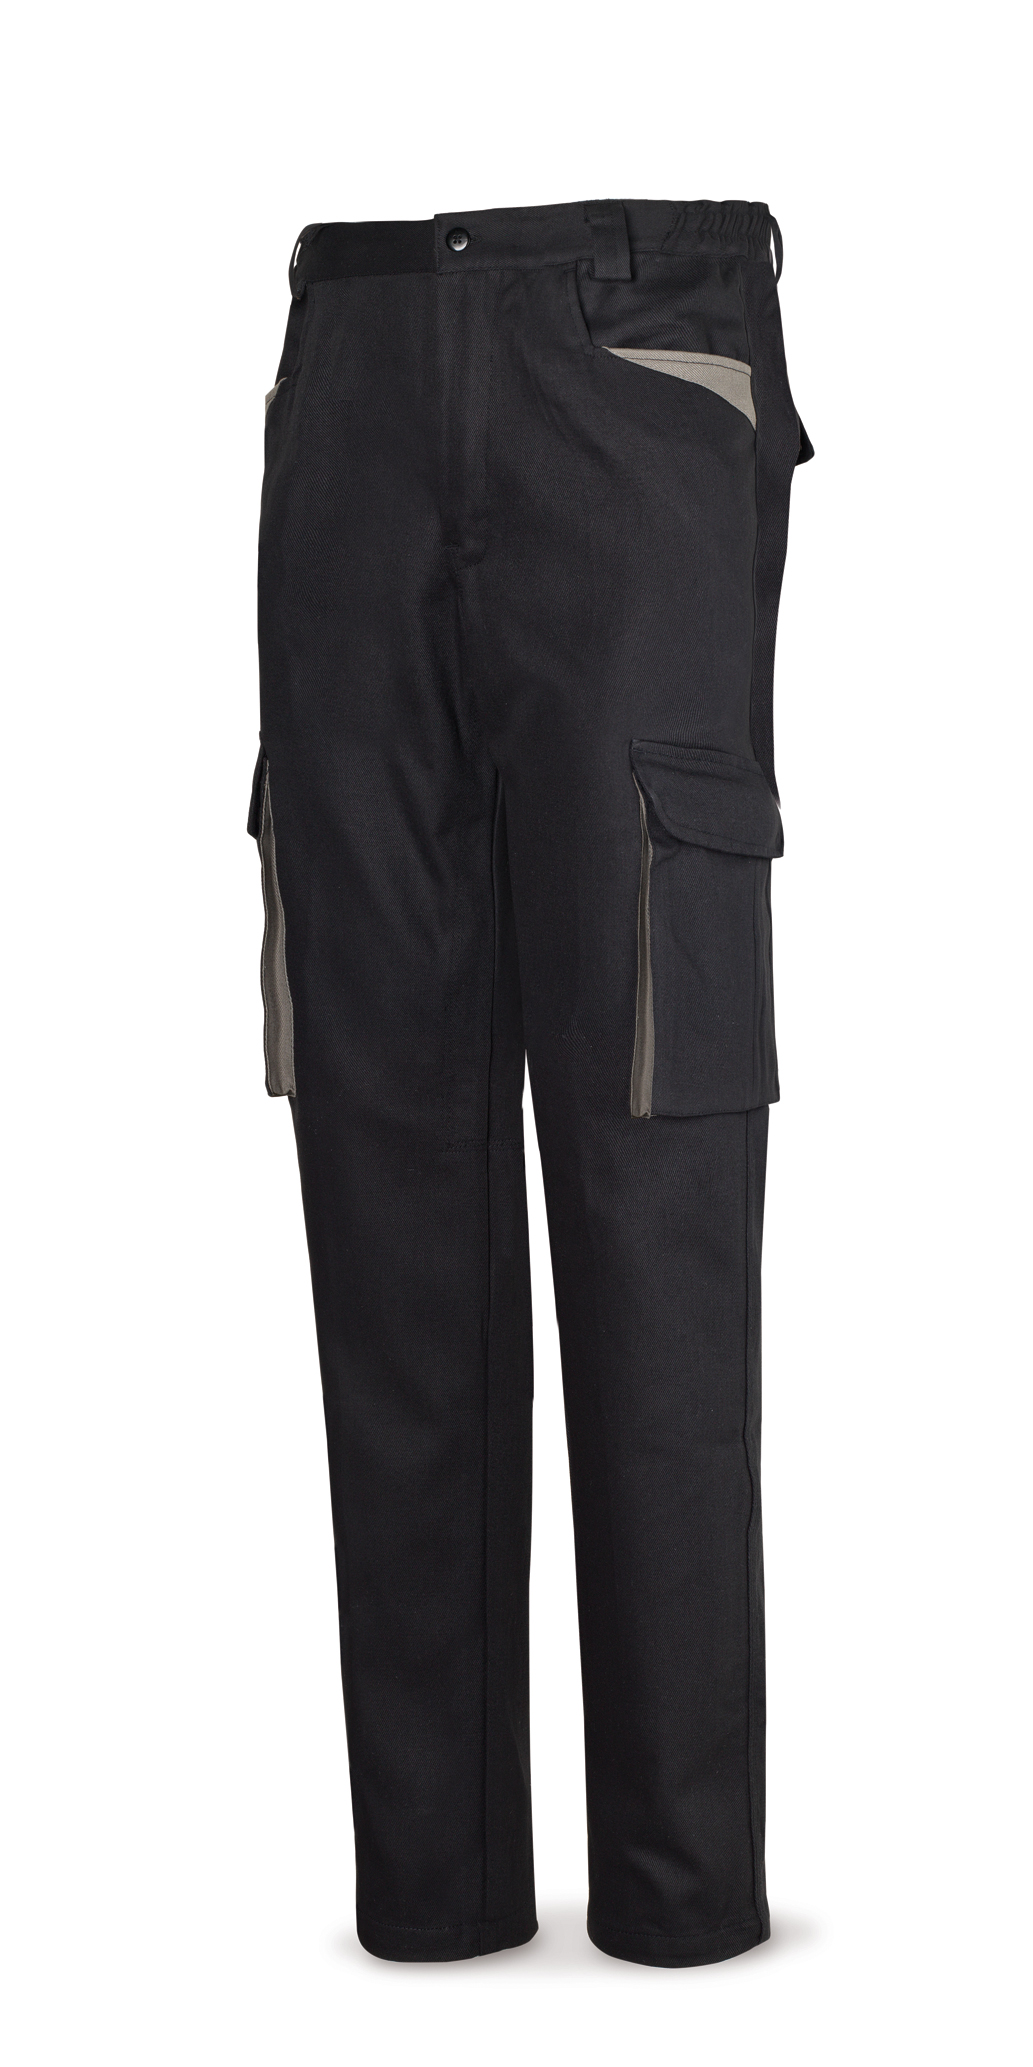 488-B SupTop Workwear SuperTop Series 270 g cotton blue jumpsuit. Multi-pockets